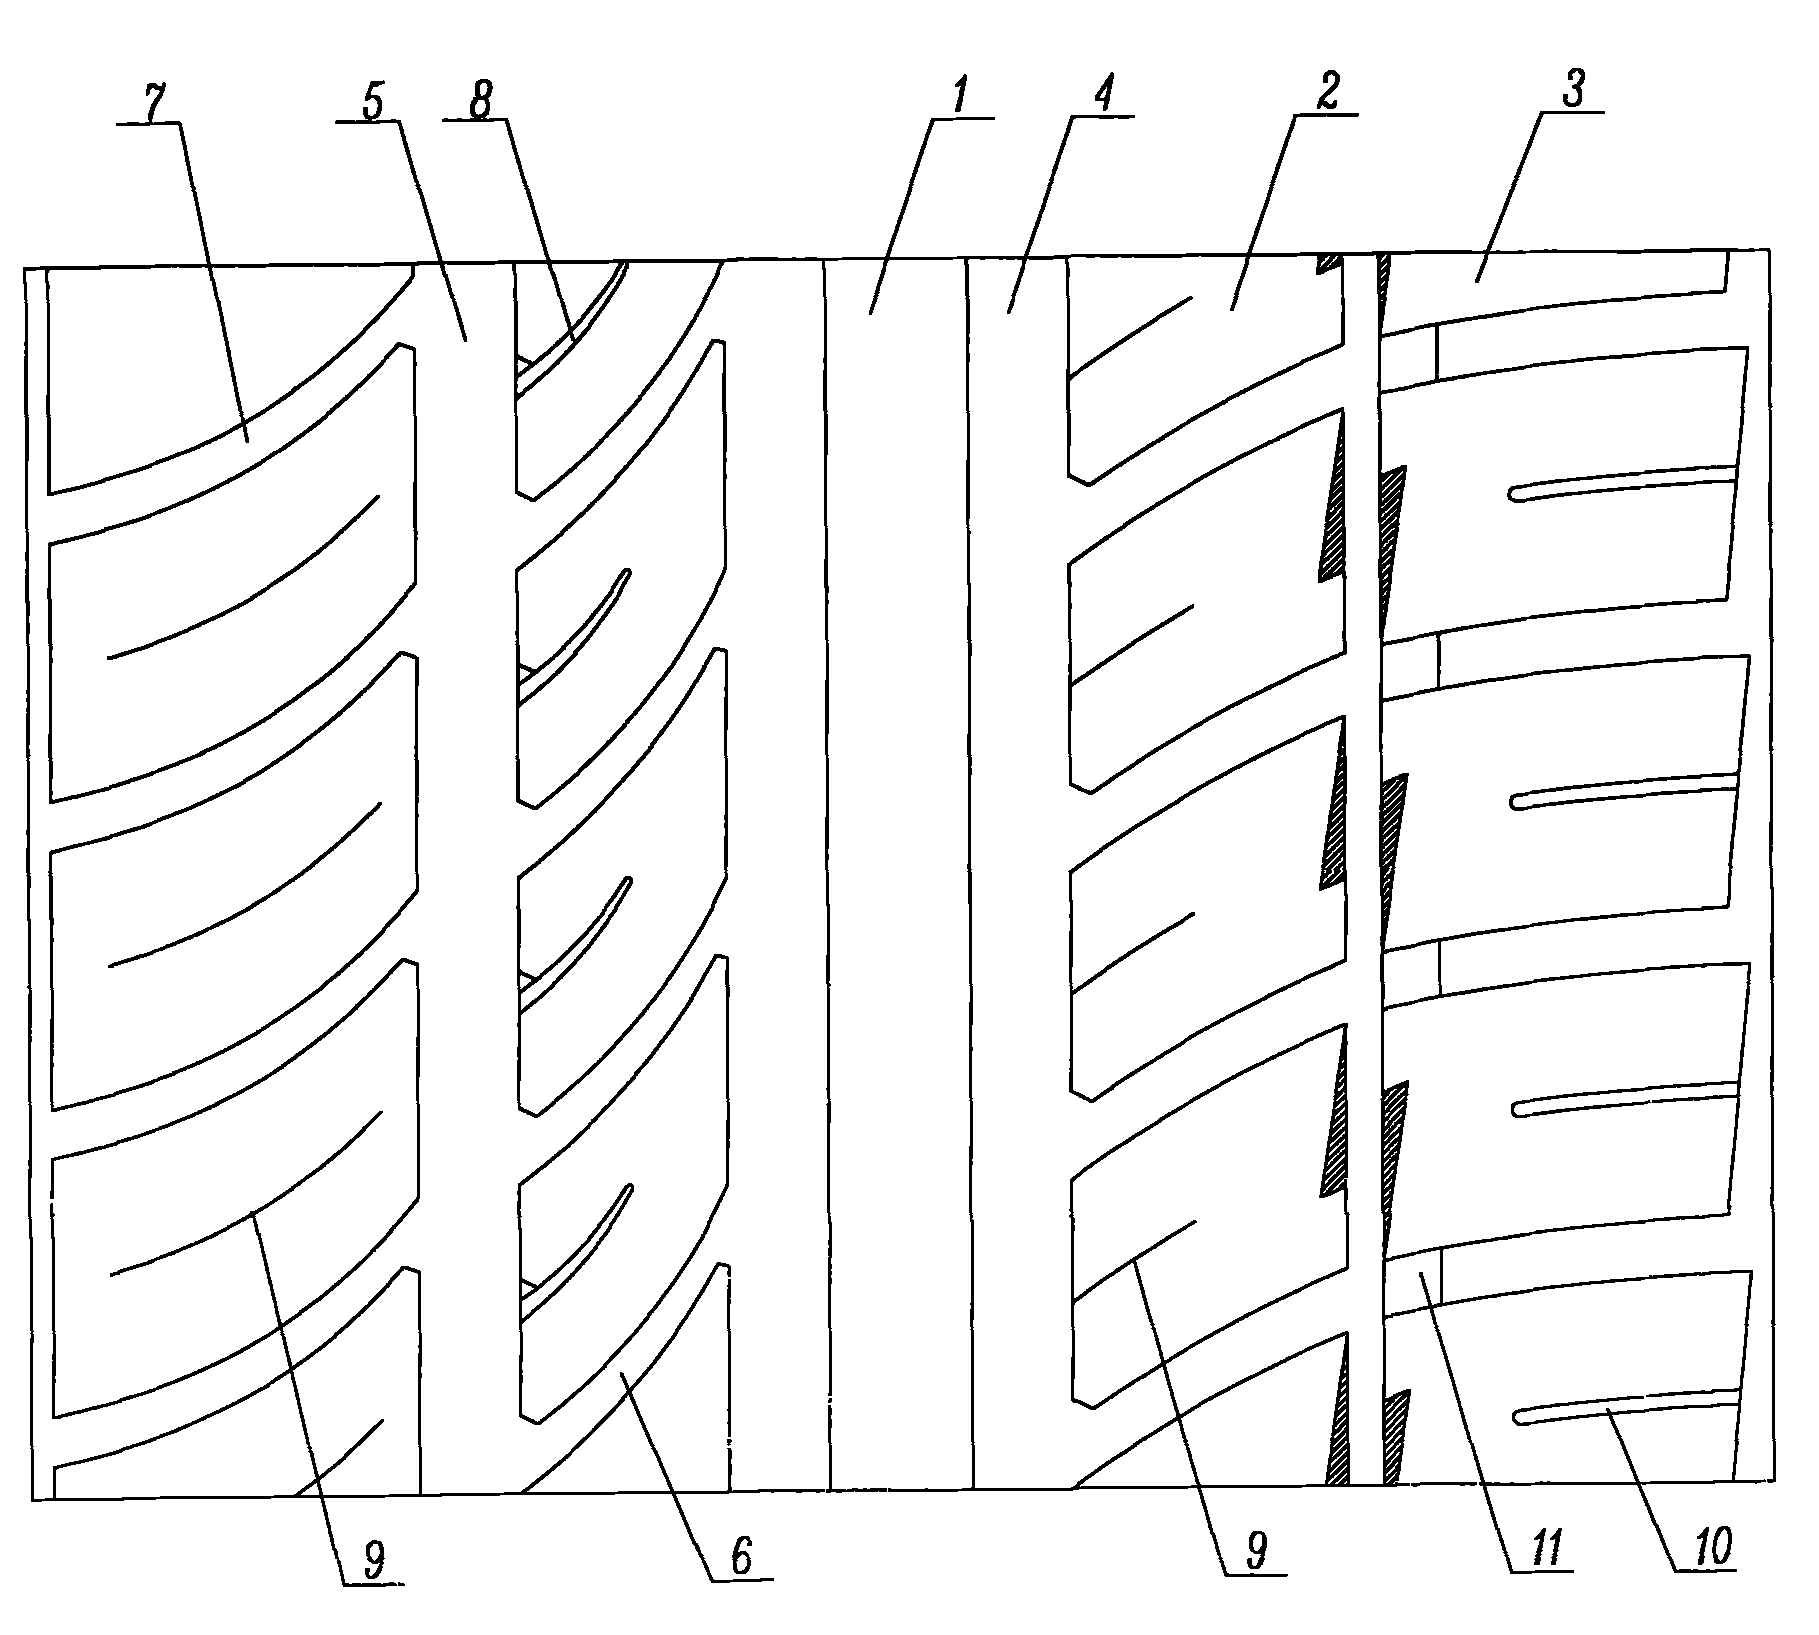 Tread pattern on radial tire of car